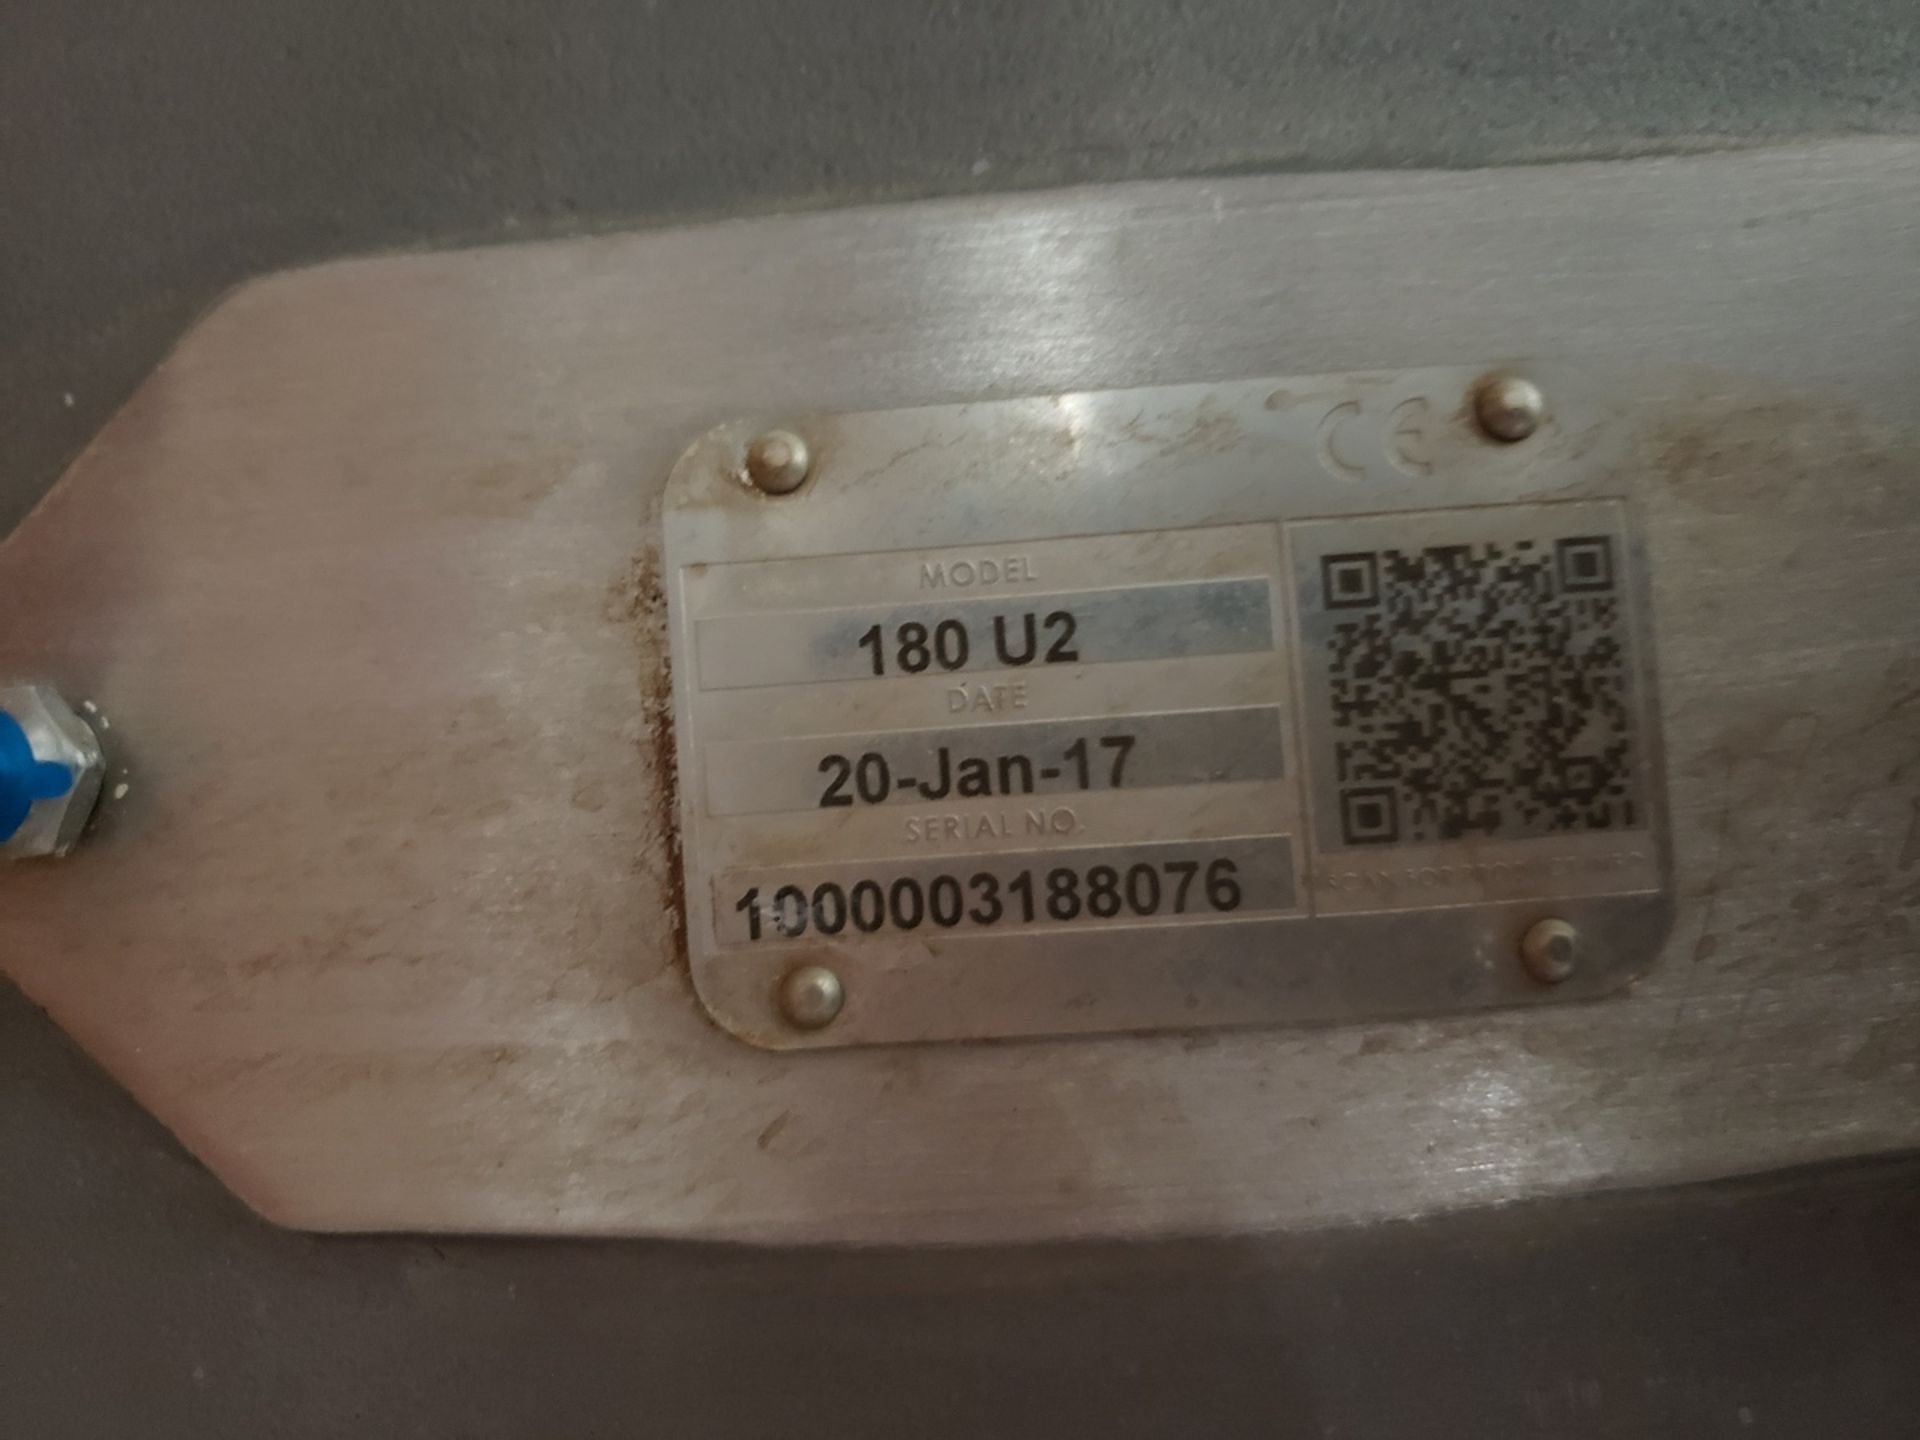 Waukesha Cherry Burrell SPX Positive Displacement Pump, M# 180-U2, S/N 1000003188076 | Rig Fee $150 - Image 2 of 3